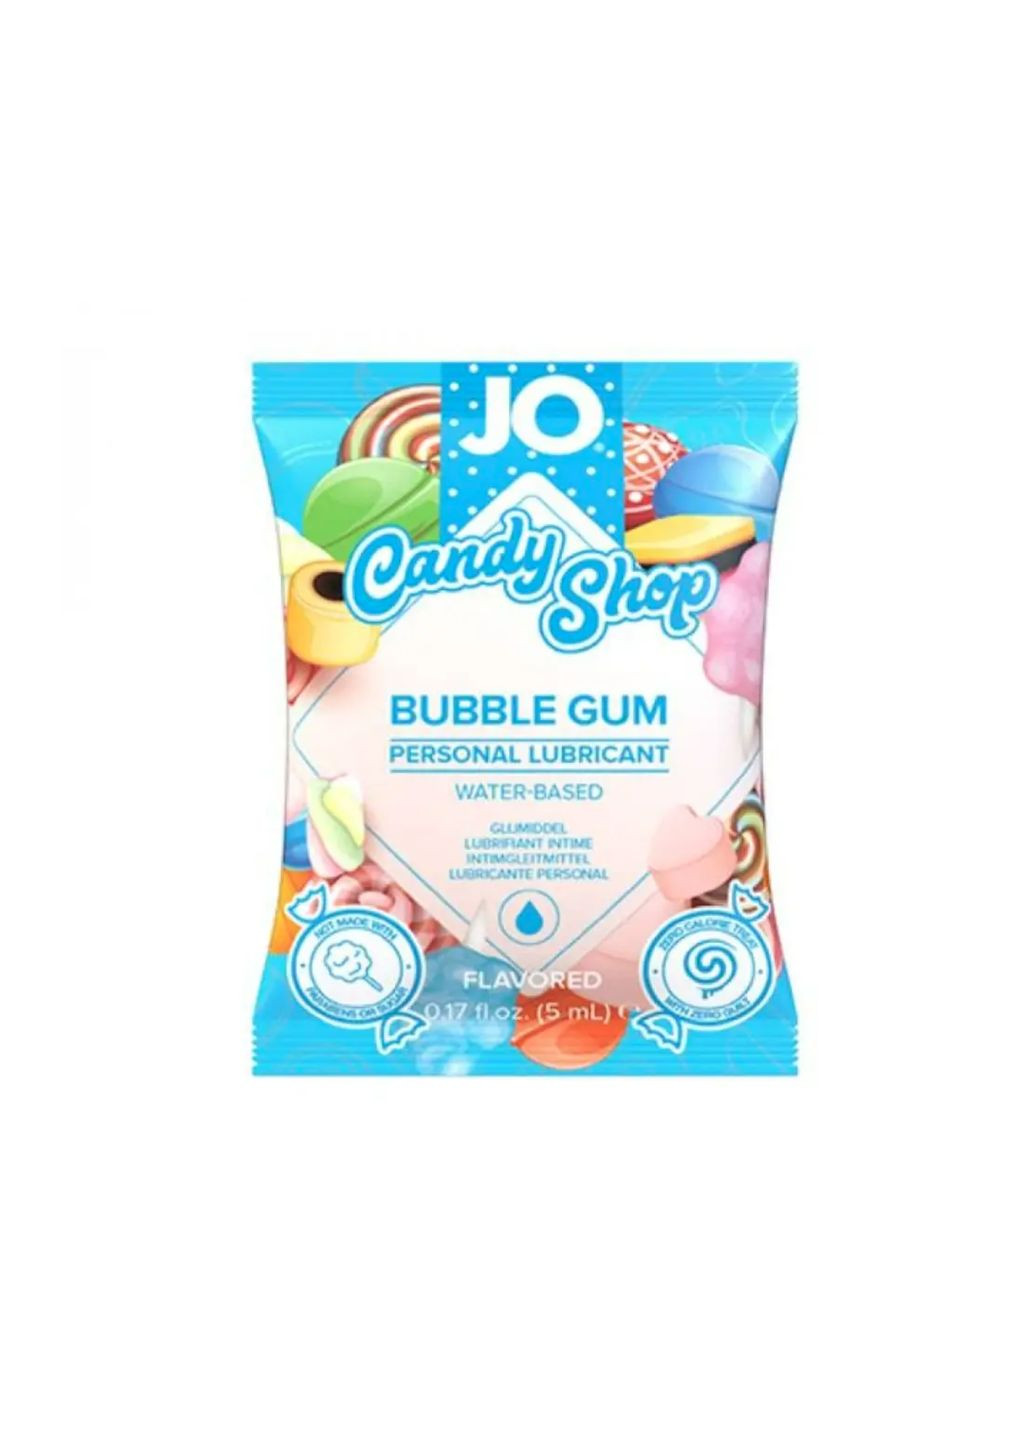 Съедобный лубрикант со вкусом жвачки H2O - Candy Shop - Bubblegum, 5 мл. System JO (289134967)